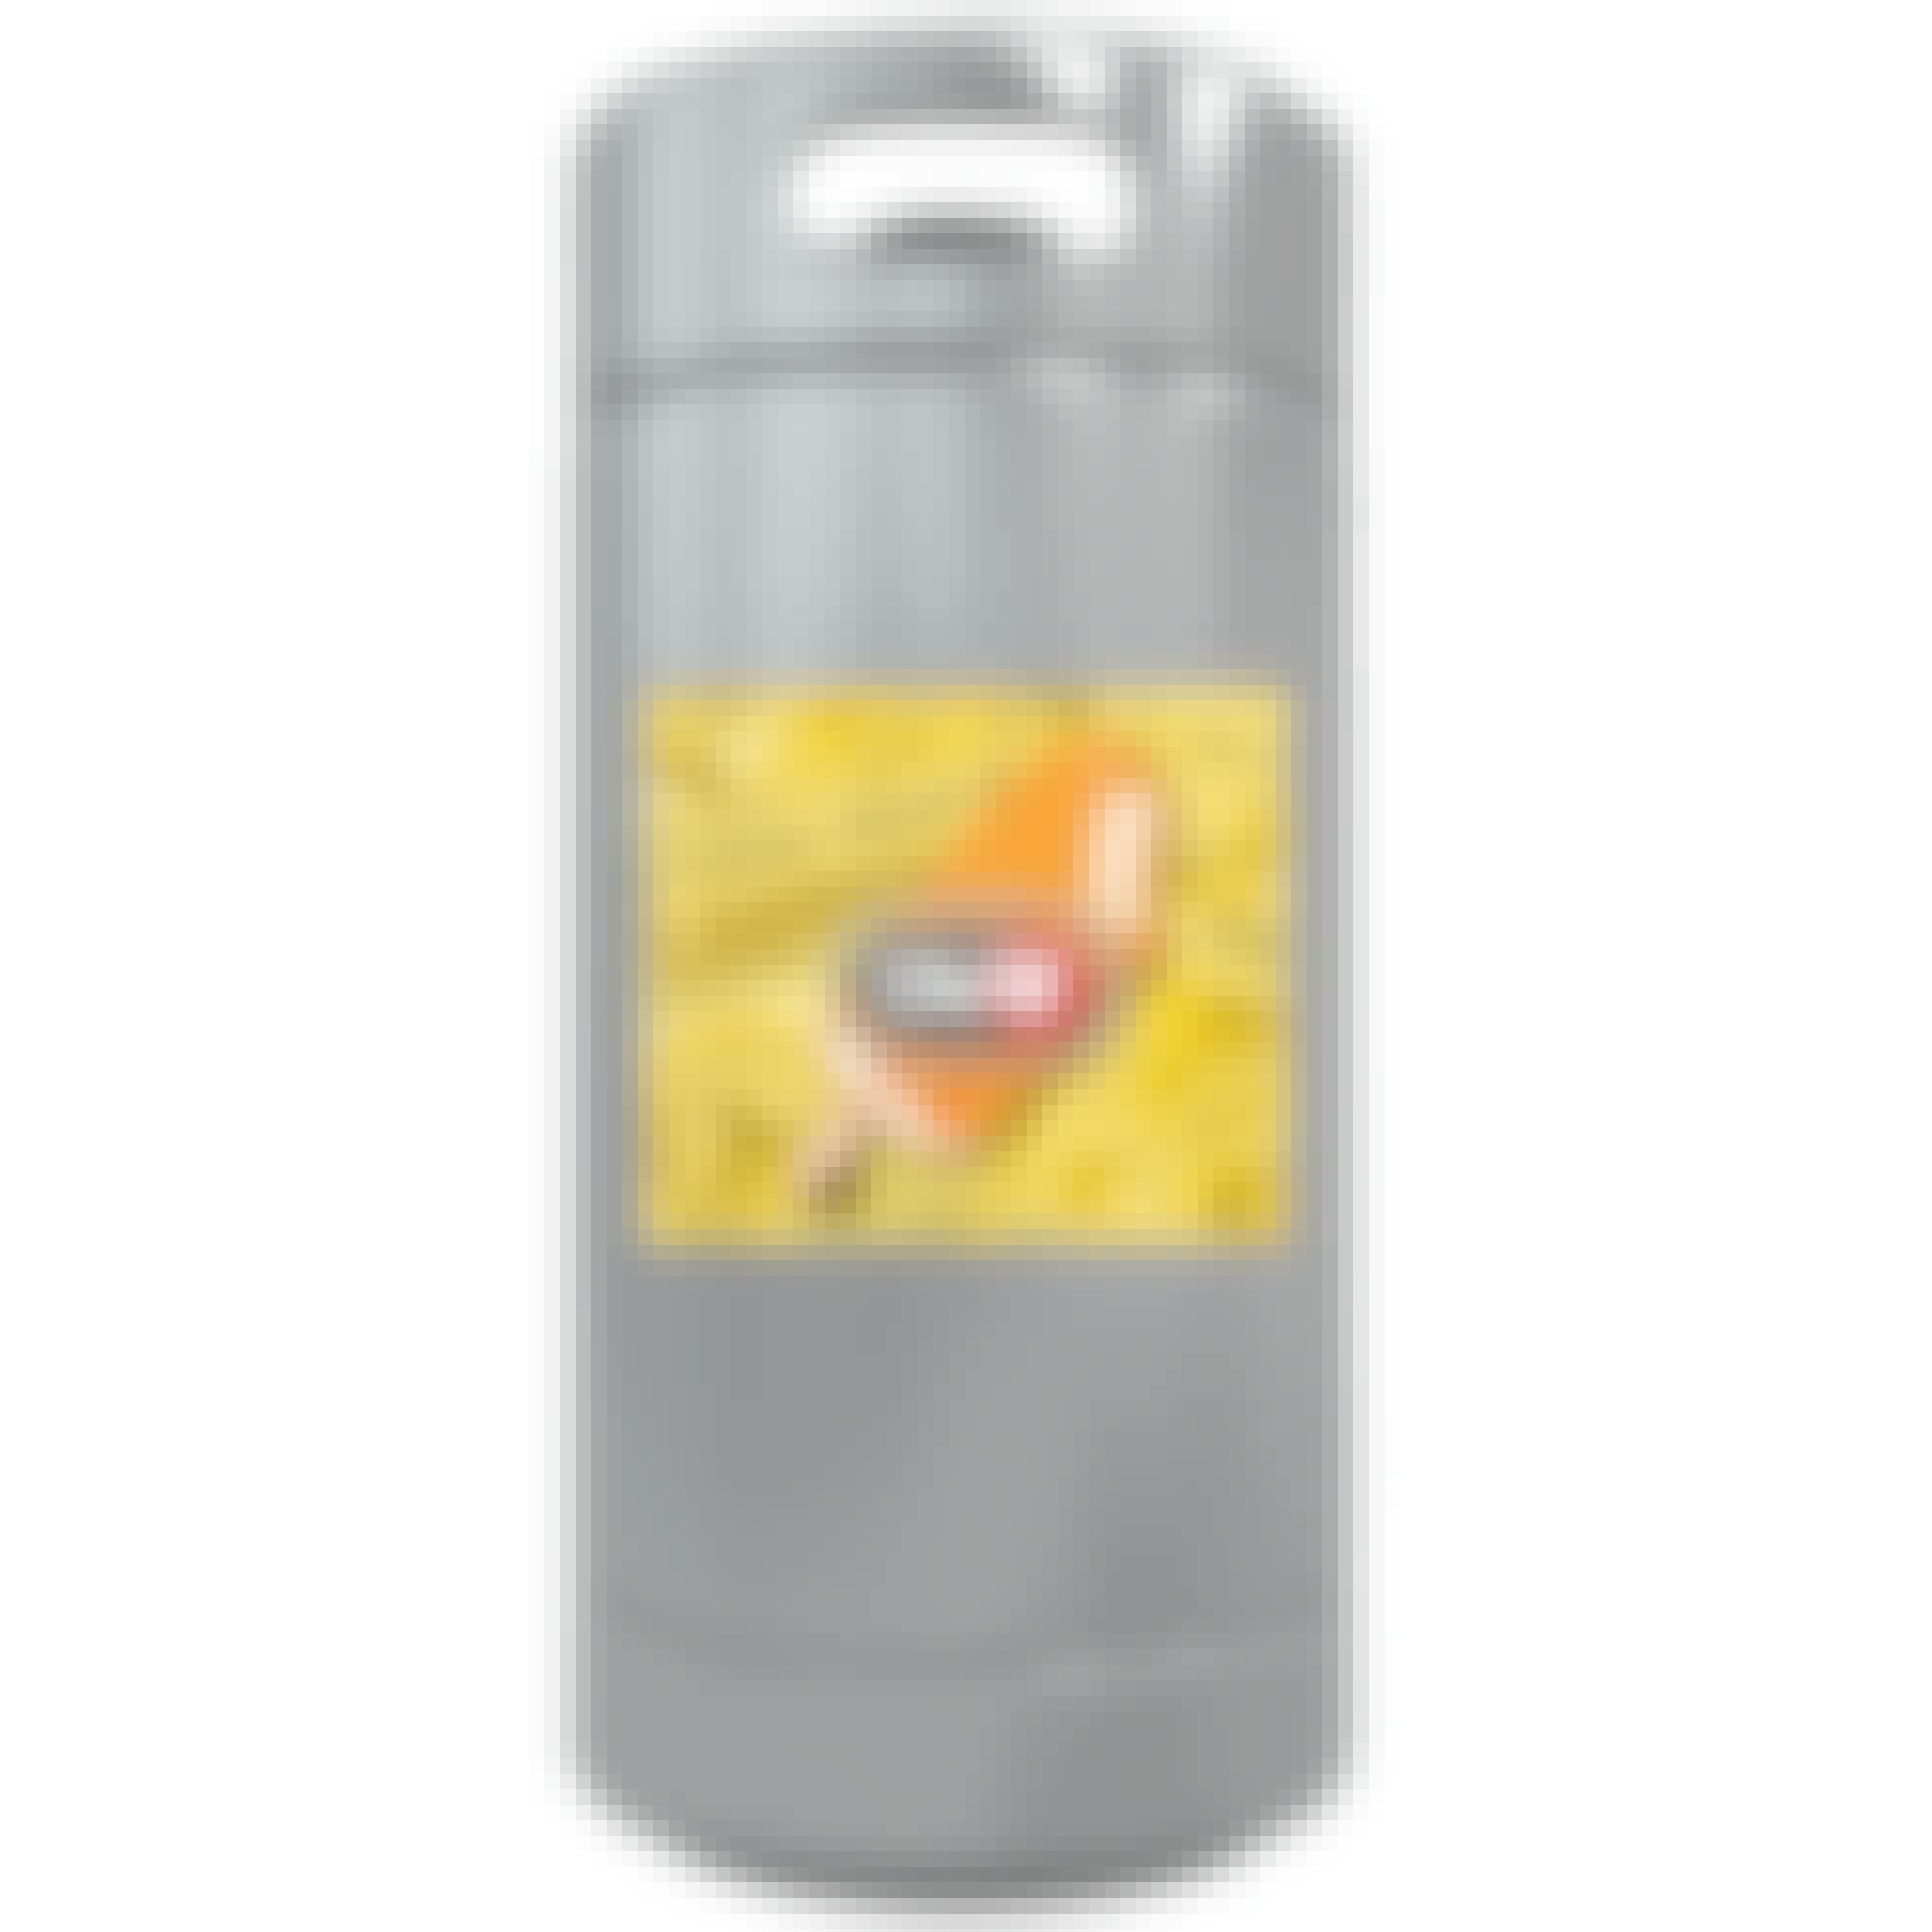 Bolero Snort OVB CREAM POP - 1/6 BARREL KEG 1/6 Barrel Keg